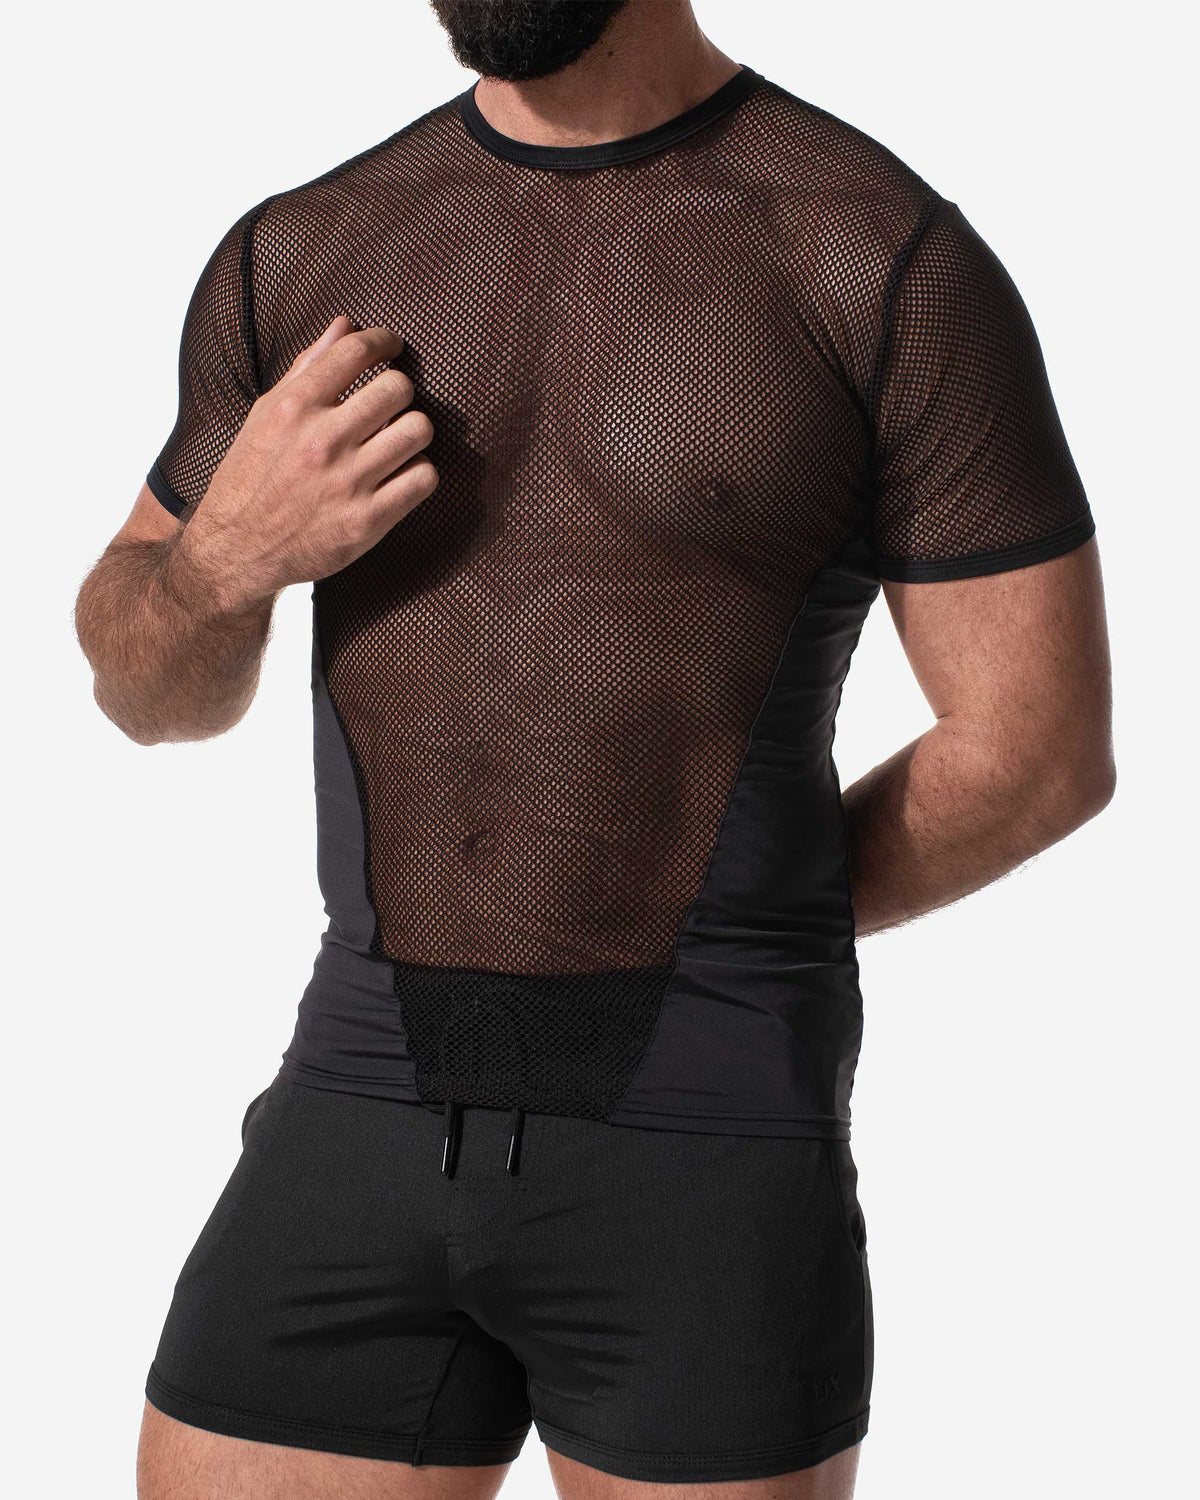 Buy FoXiSN Men's Underwear Mens Mesh Briefs Breathable Mens Mesh